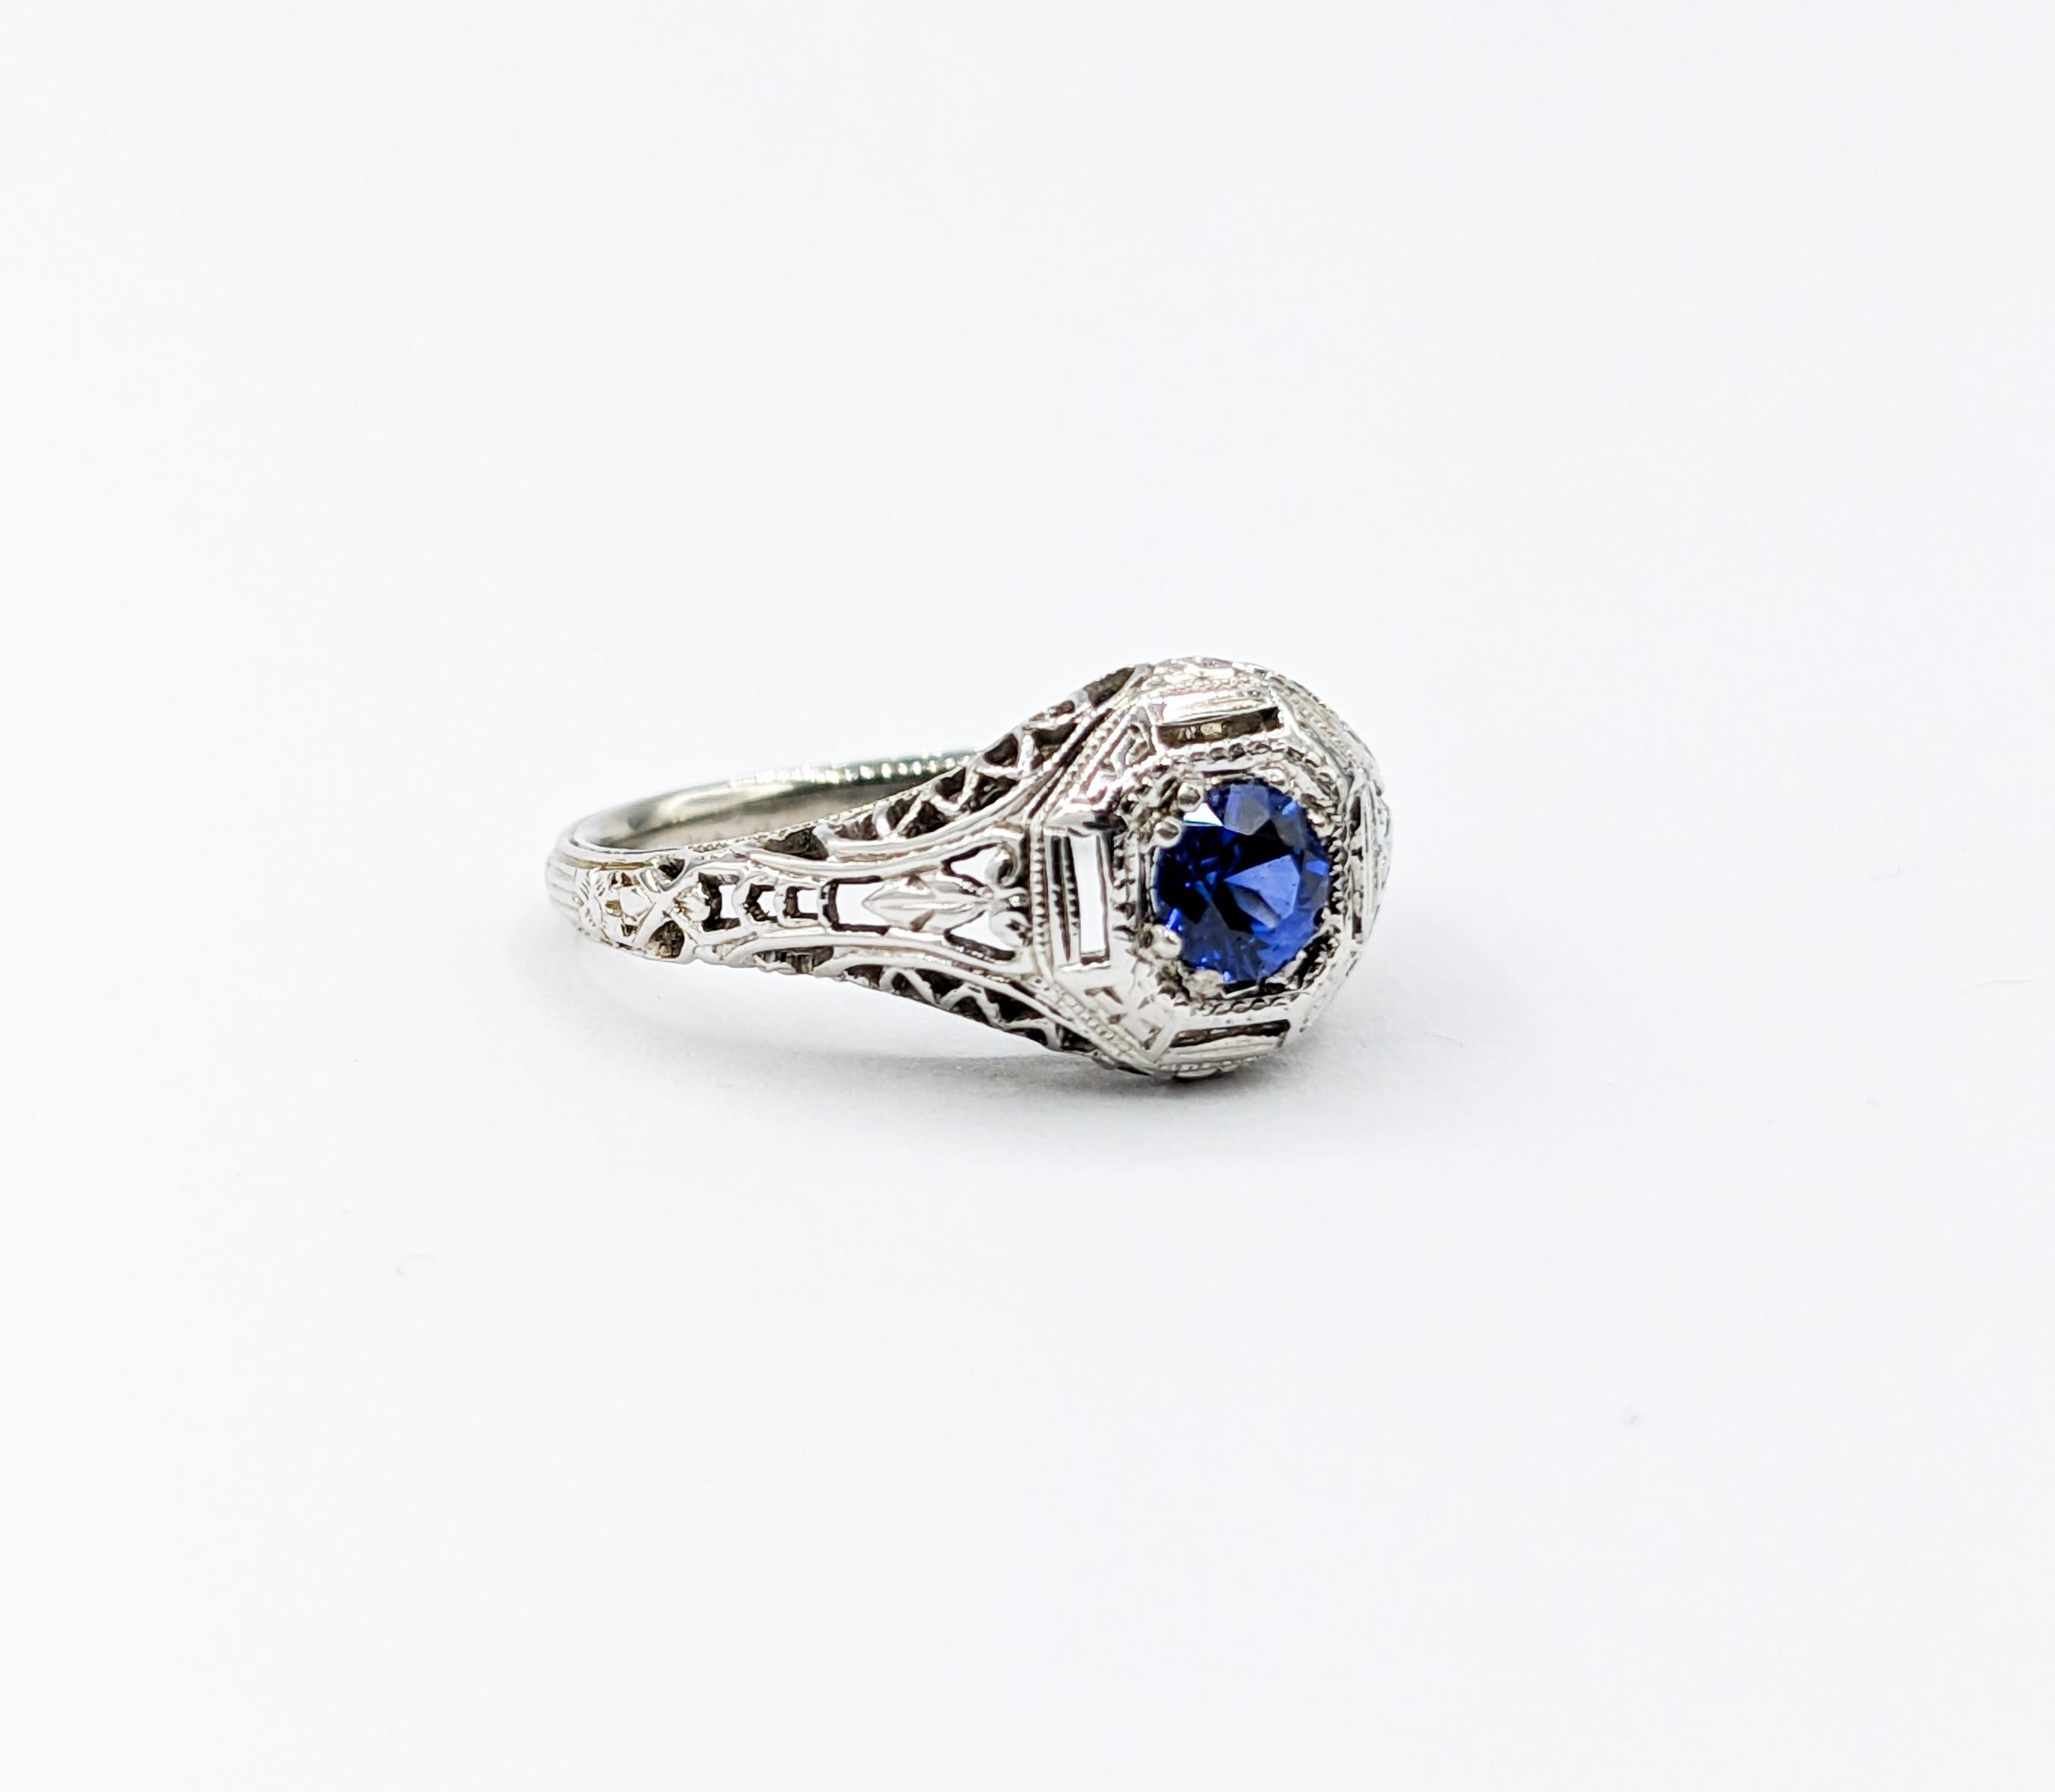 Antique Art Deco Filigree Sapphire Ring 18kt White Gold For Sale 2